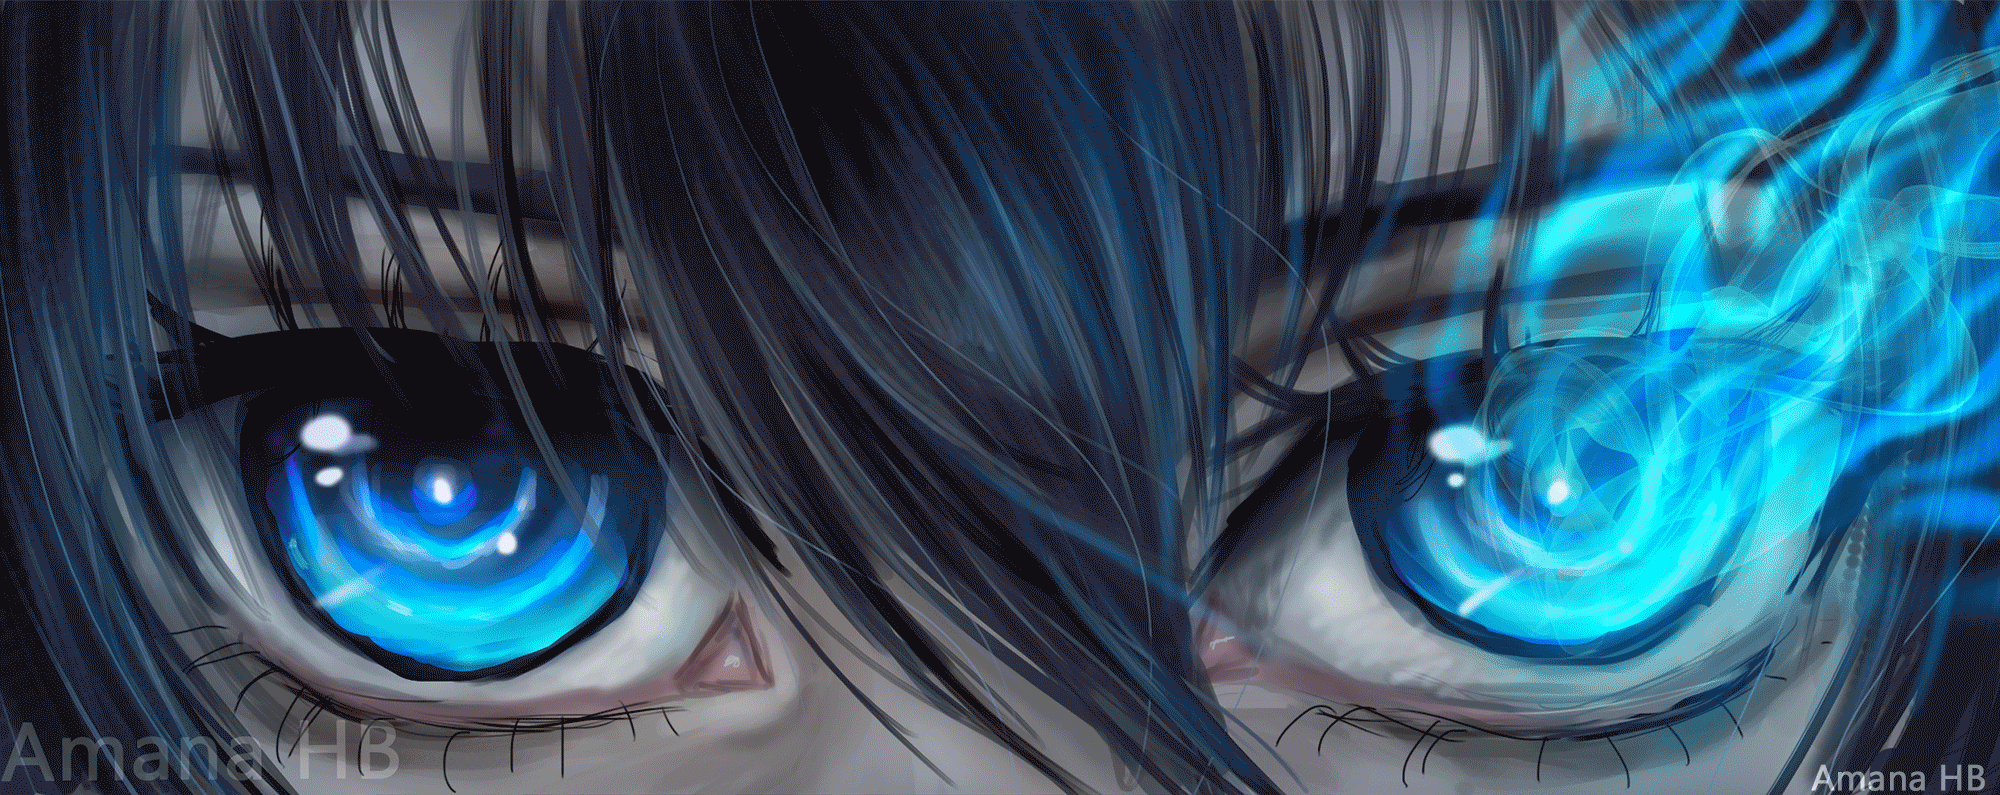 10 Anime Eyes by Amana_HB